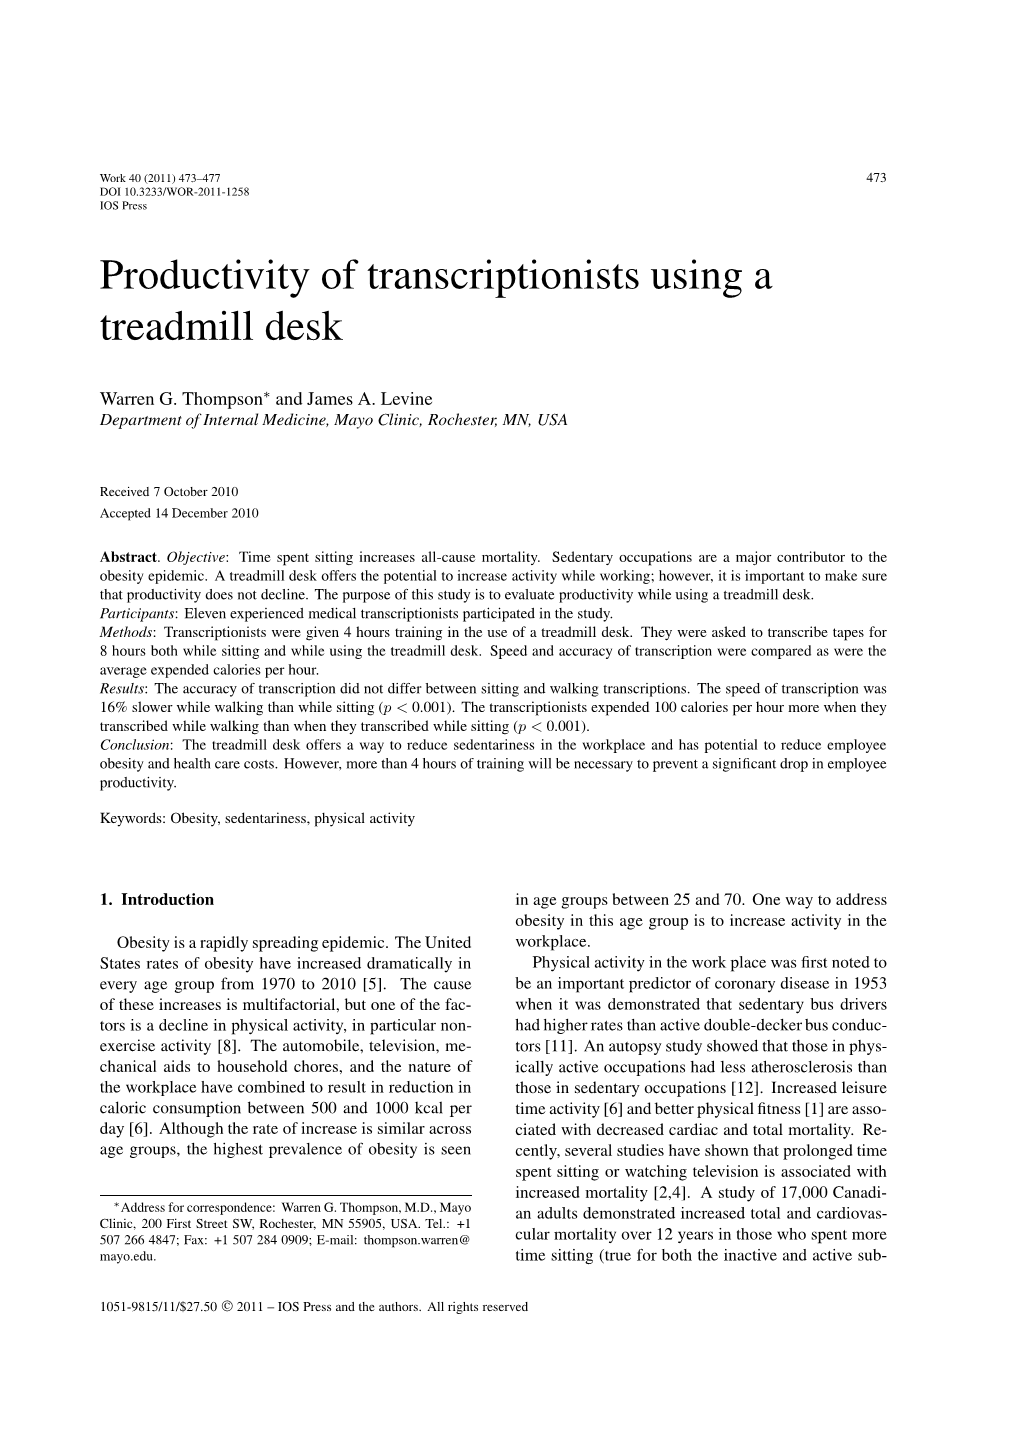 Productivity of Transcriptionists Using a Treadmill Desk